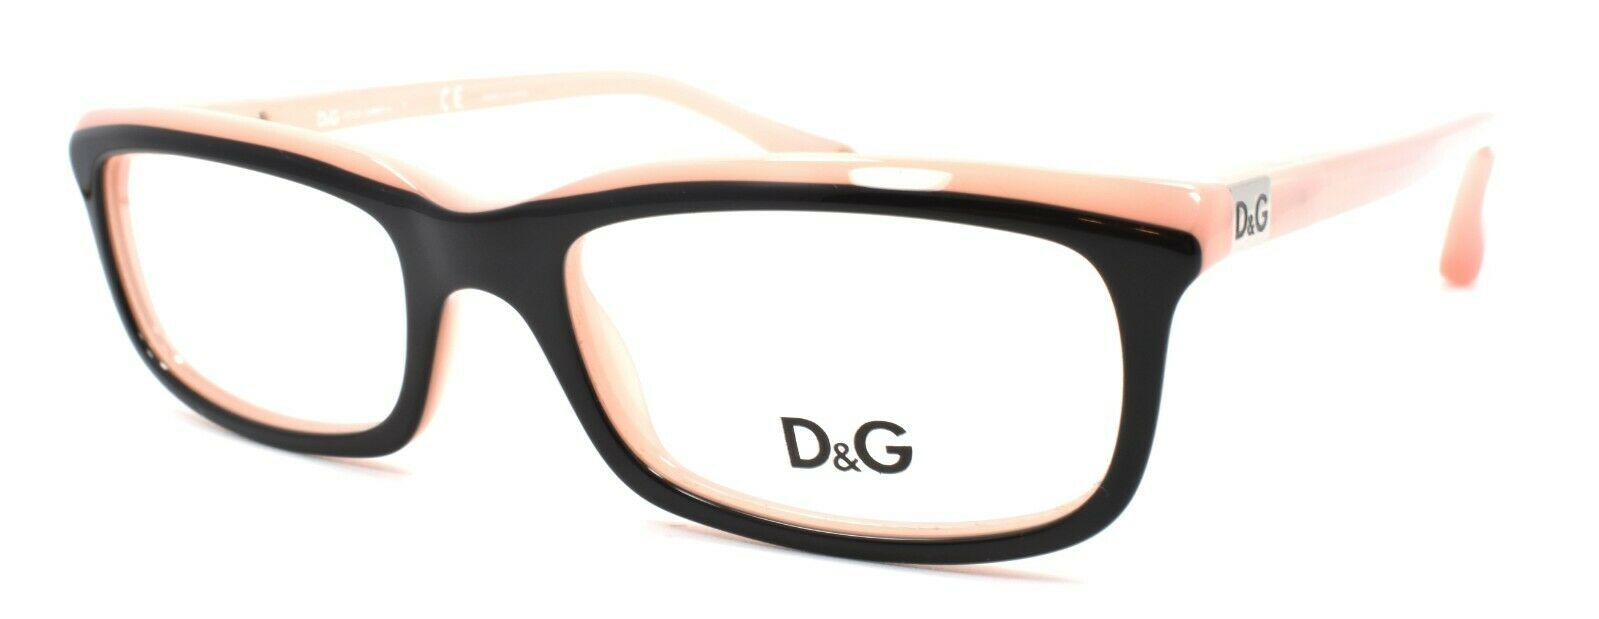 1-Dolce & Gabbana D&G 1214 1878 Women's Eyeglasses Frames 49-17-135 Black on Pink-679420421247-IKSpecs